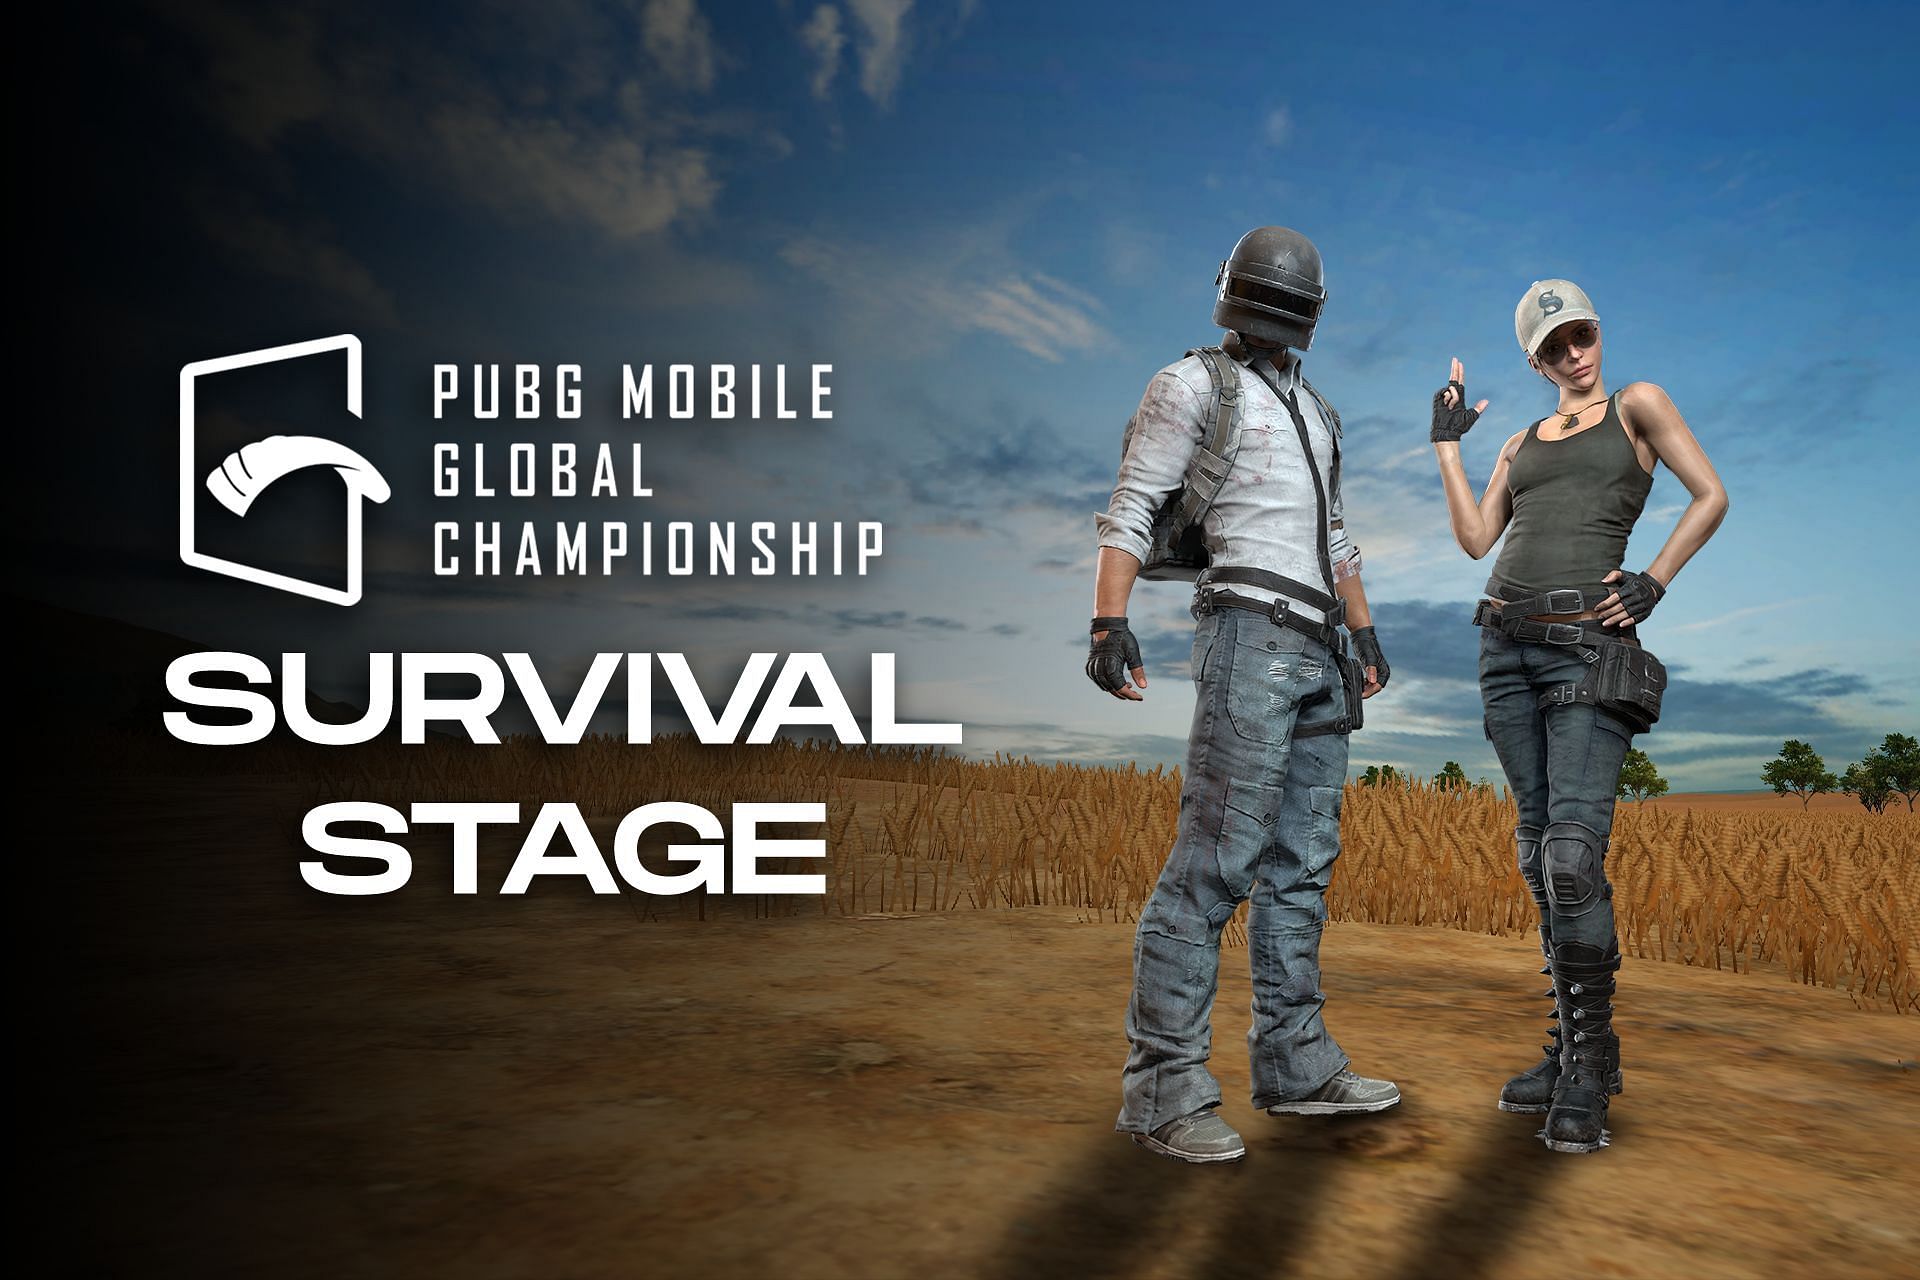 PMGC Survival Stage became a huge hit in the global gaming community (Image via Sportskeeda)